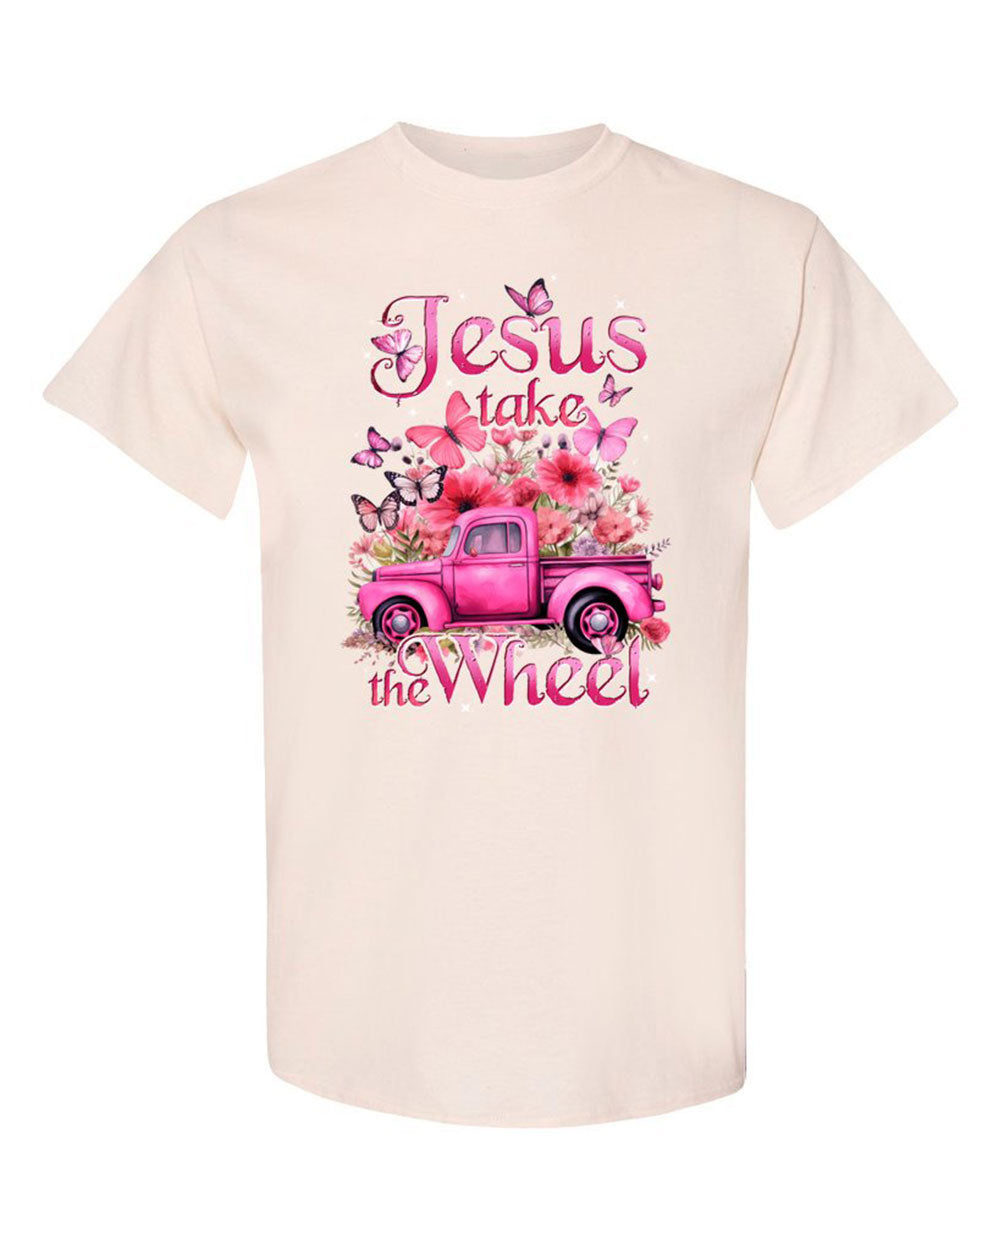 Jesus Take The Wheel Cotton Shirt - Tytd040124